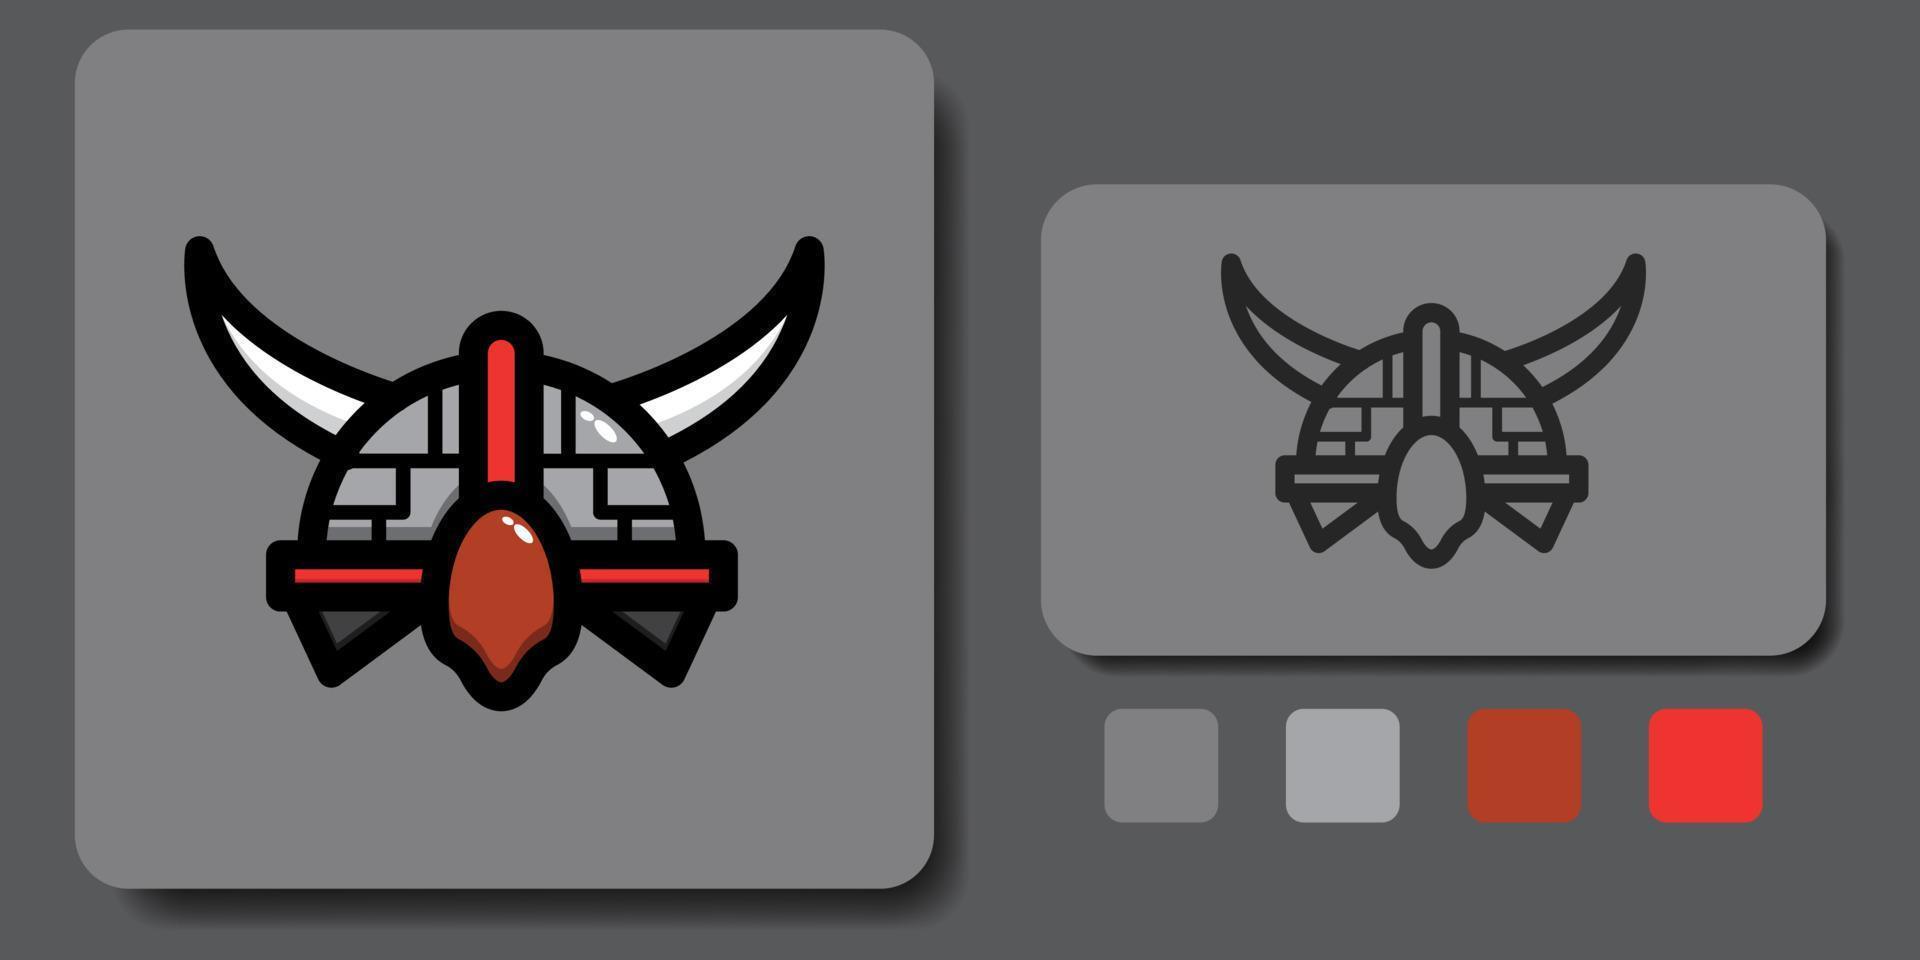 Futuristic viking helmet mascot design illustration. Sports team mascot logo type illustration vector